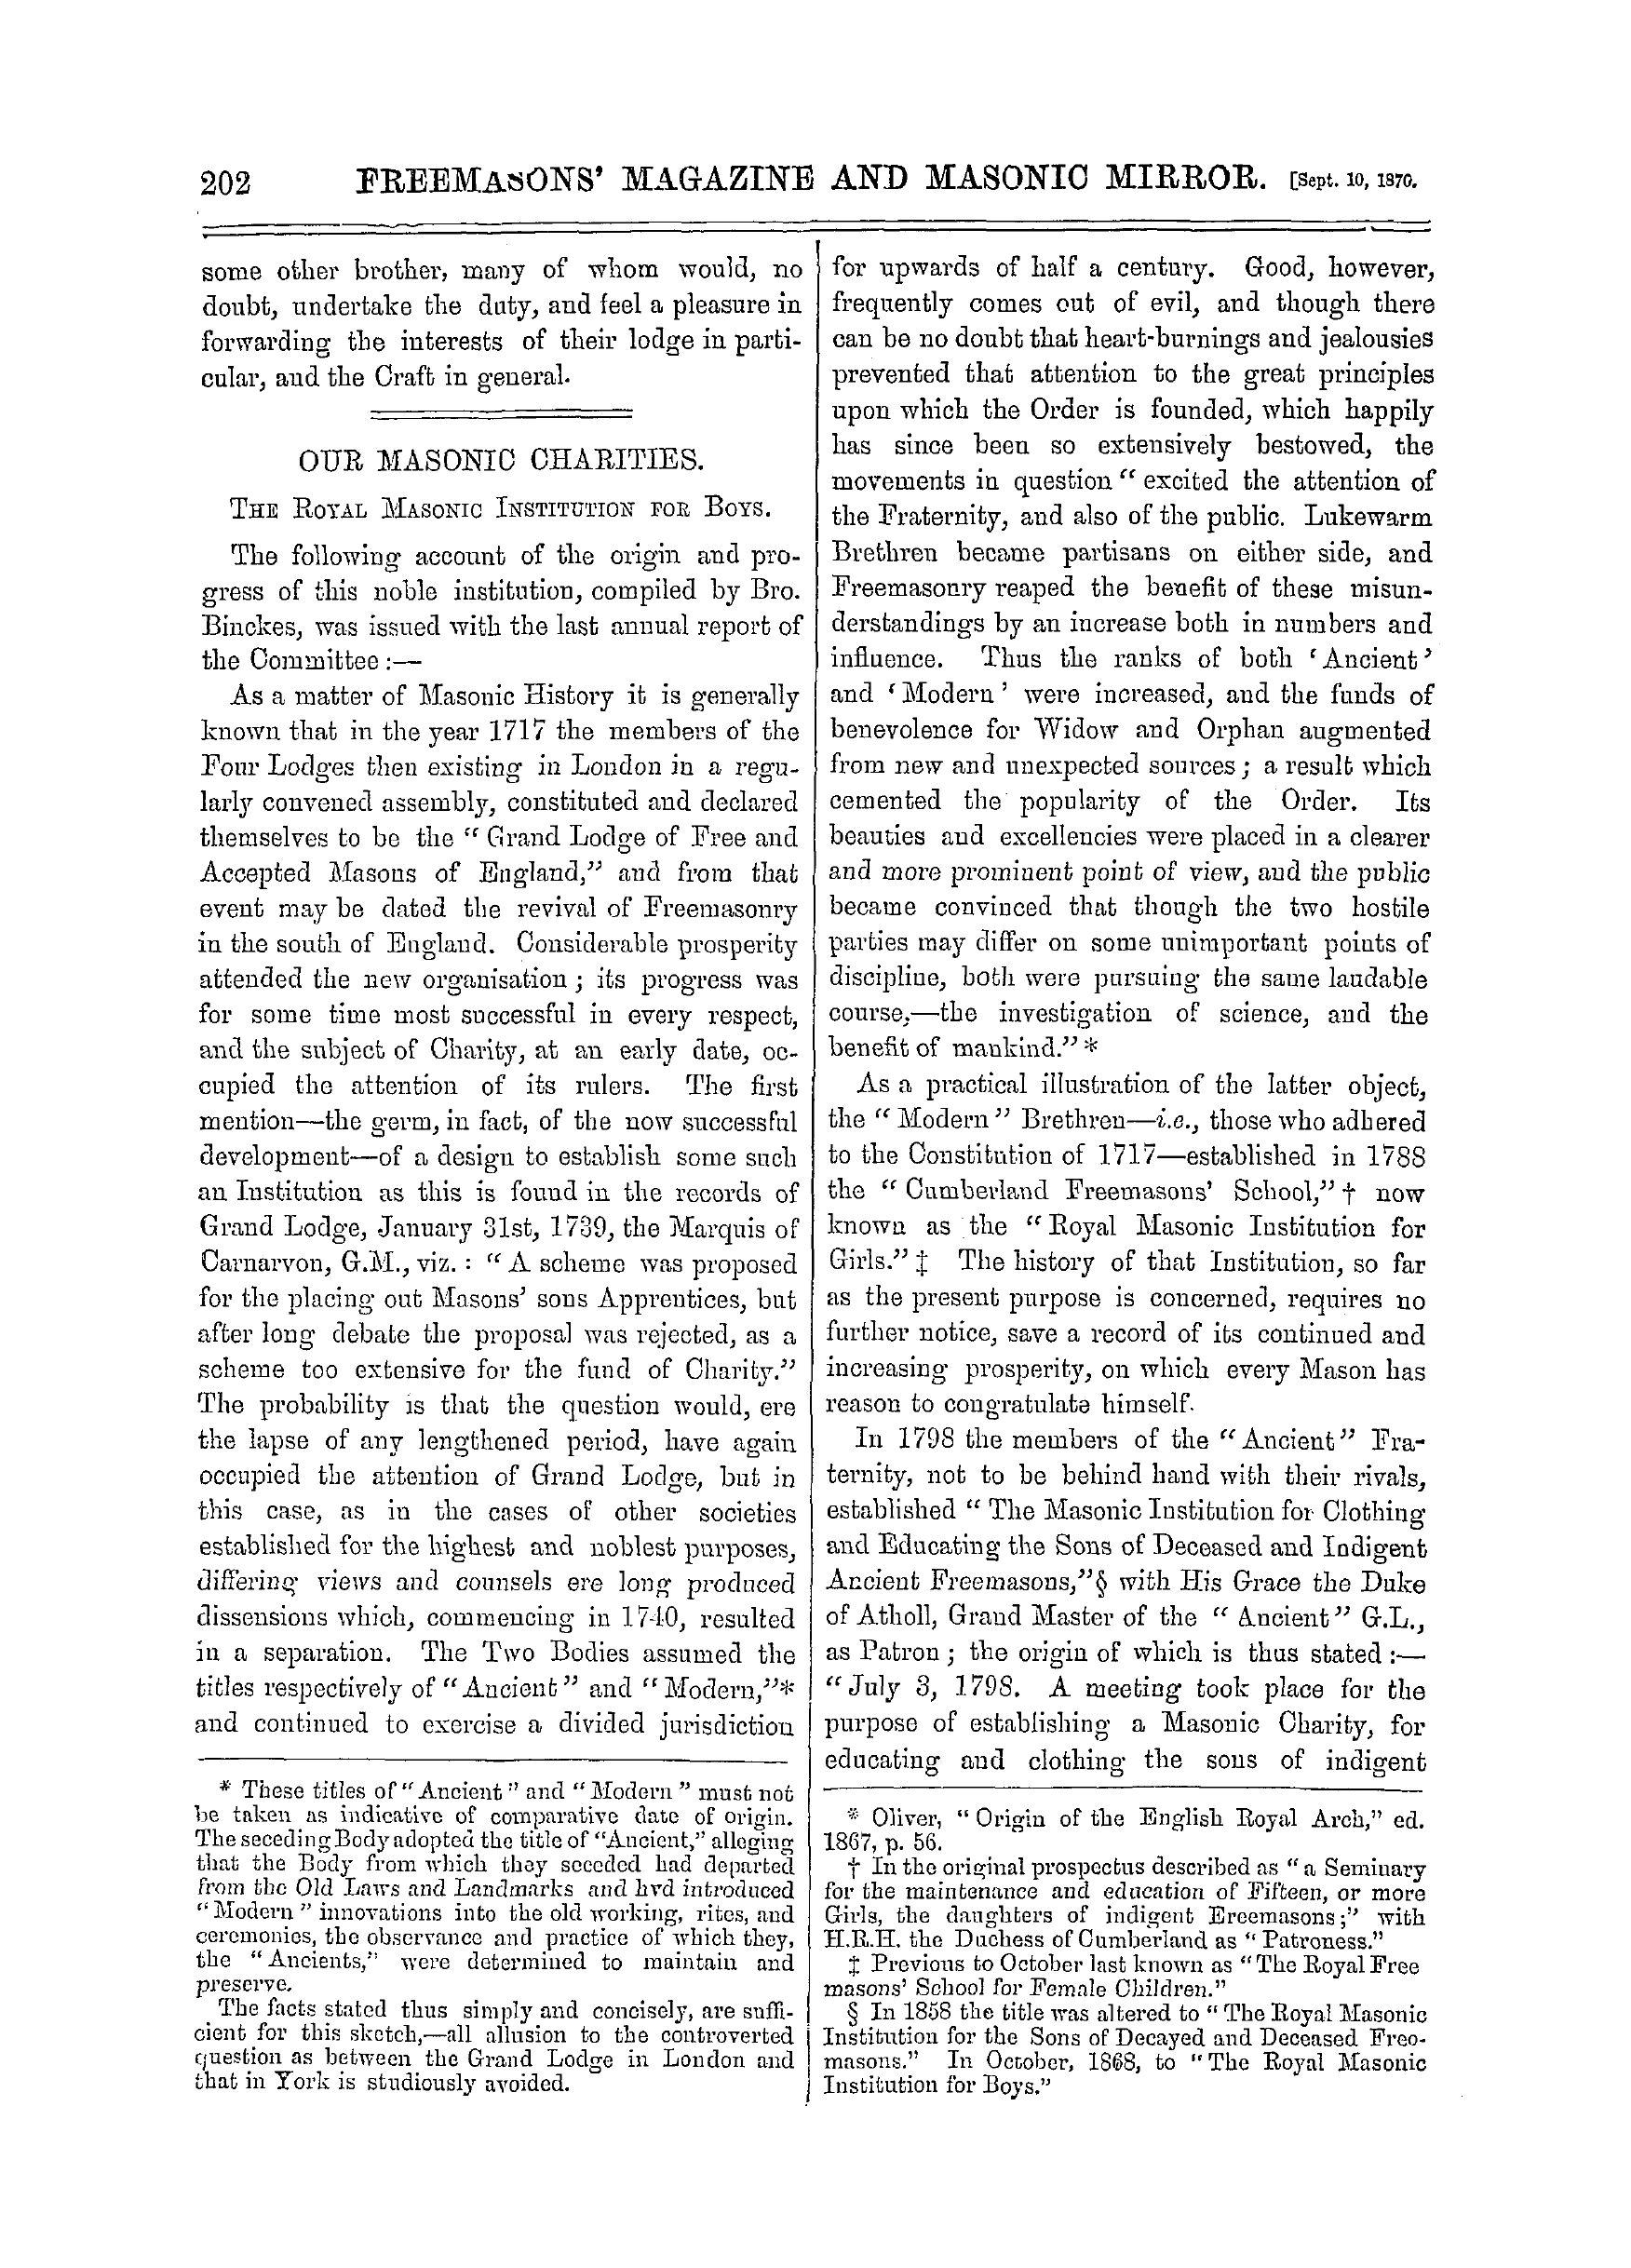 The Freemasons' Monthly Magazine: 1870-09-10 - Lodge Reports.